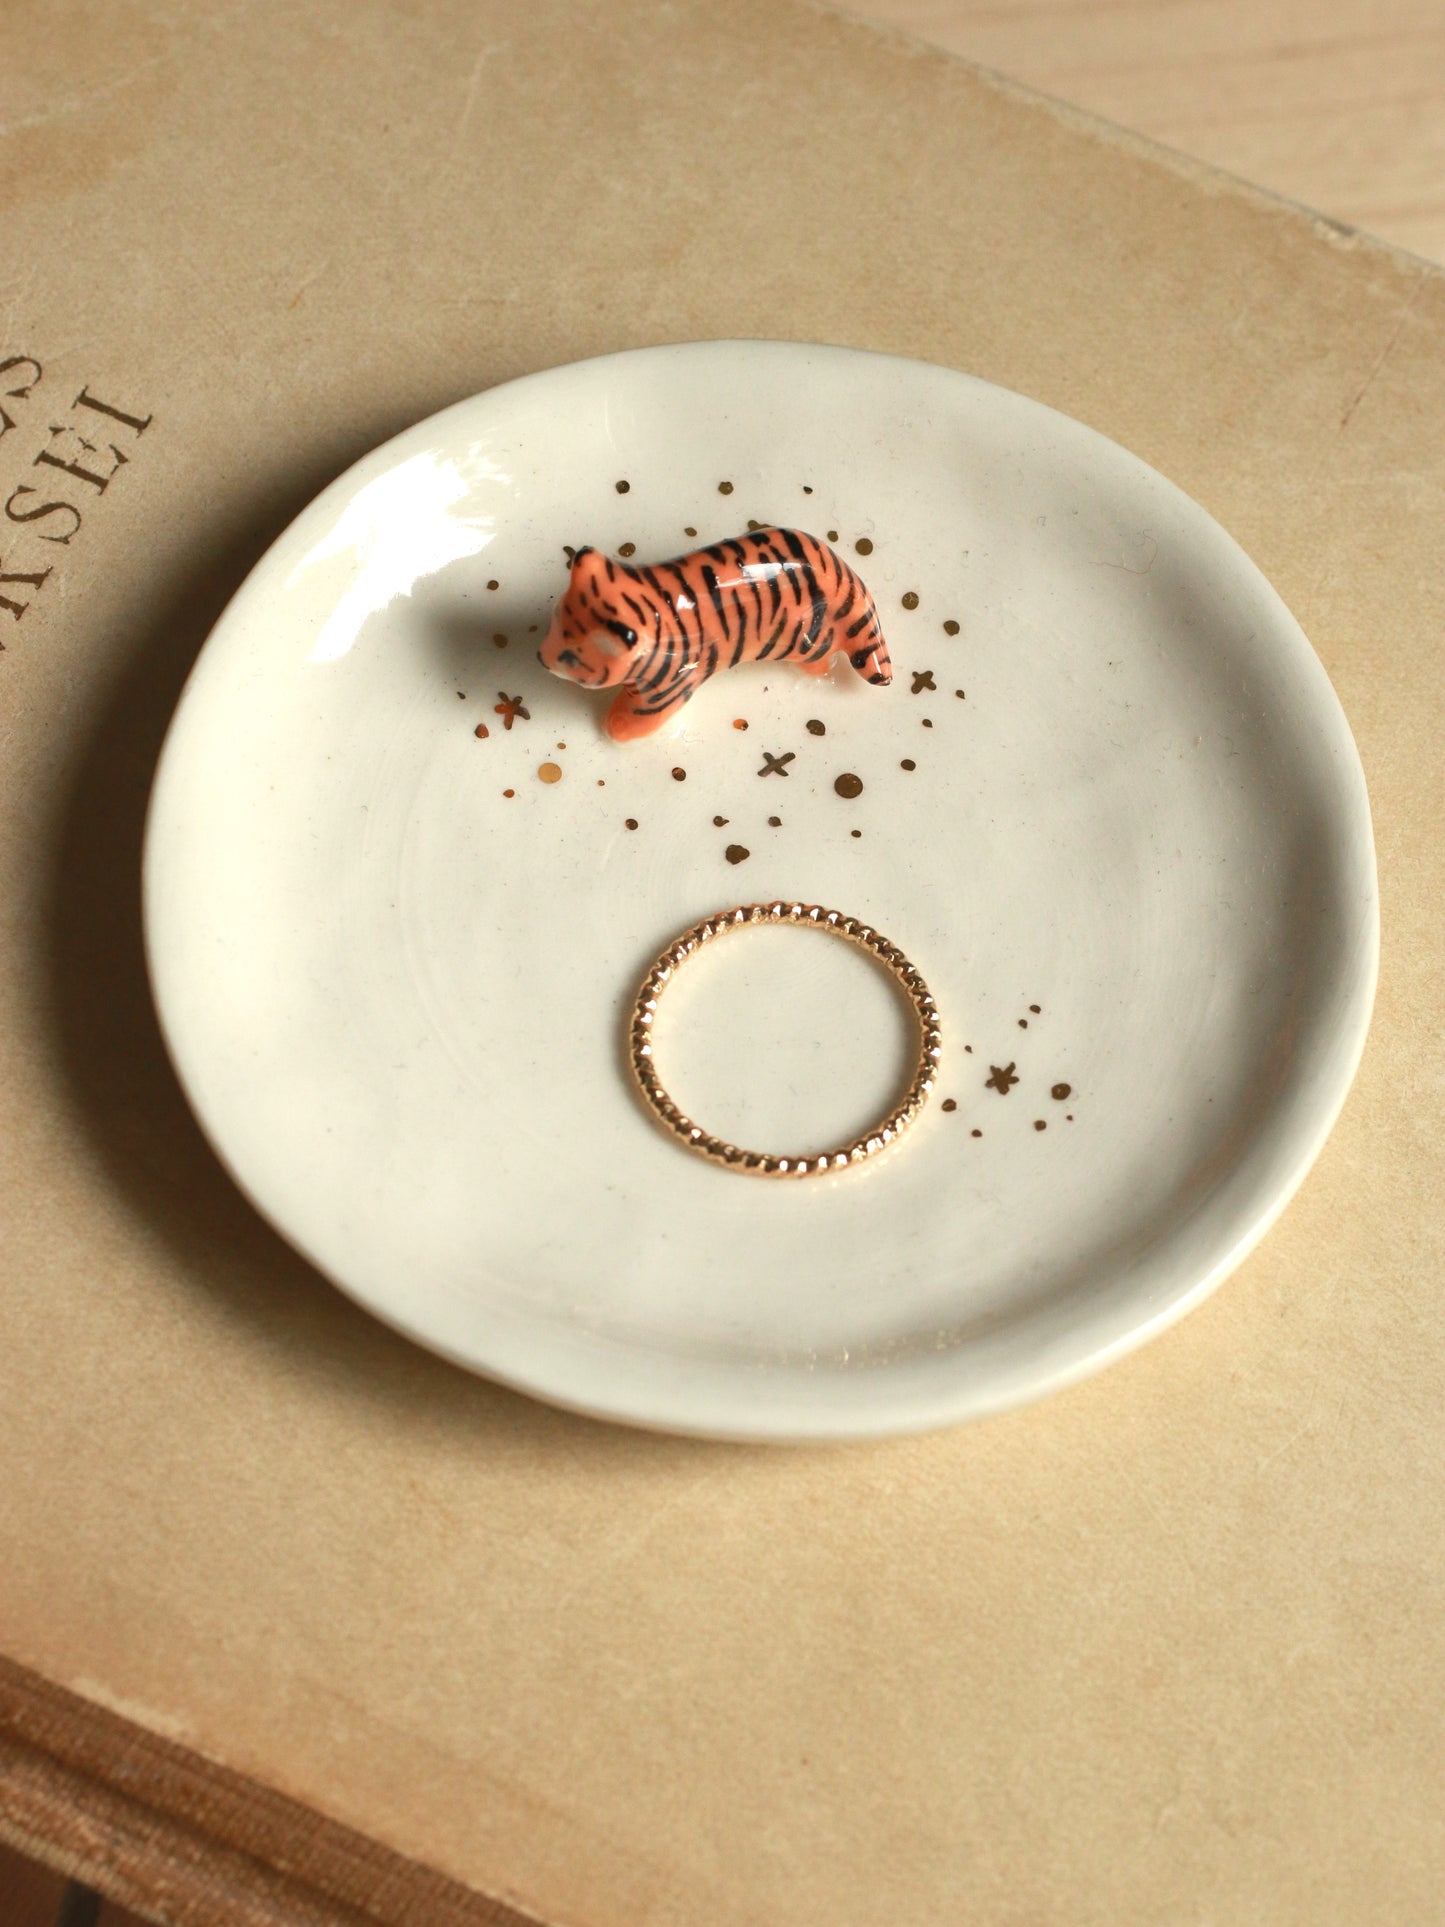 Tiger Ring Dish - Porcelain jewelry dish